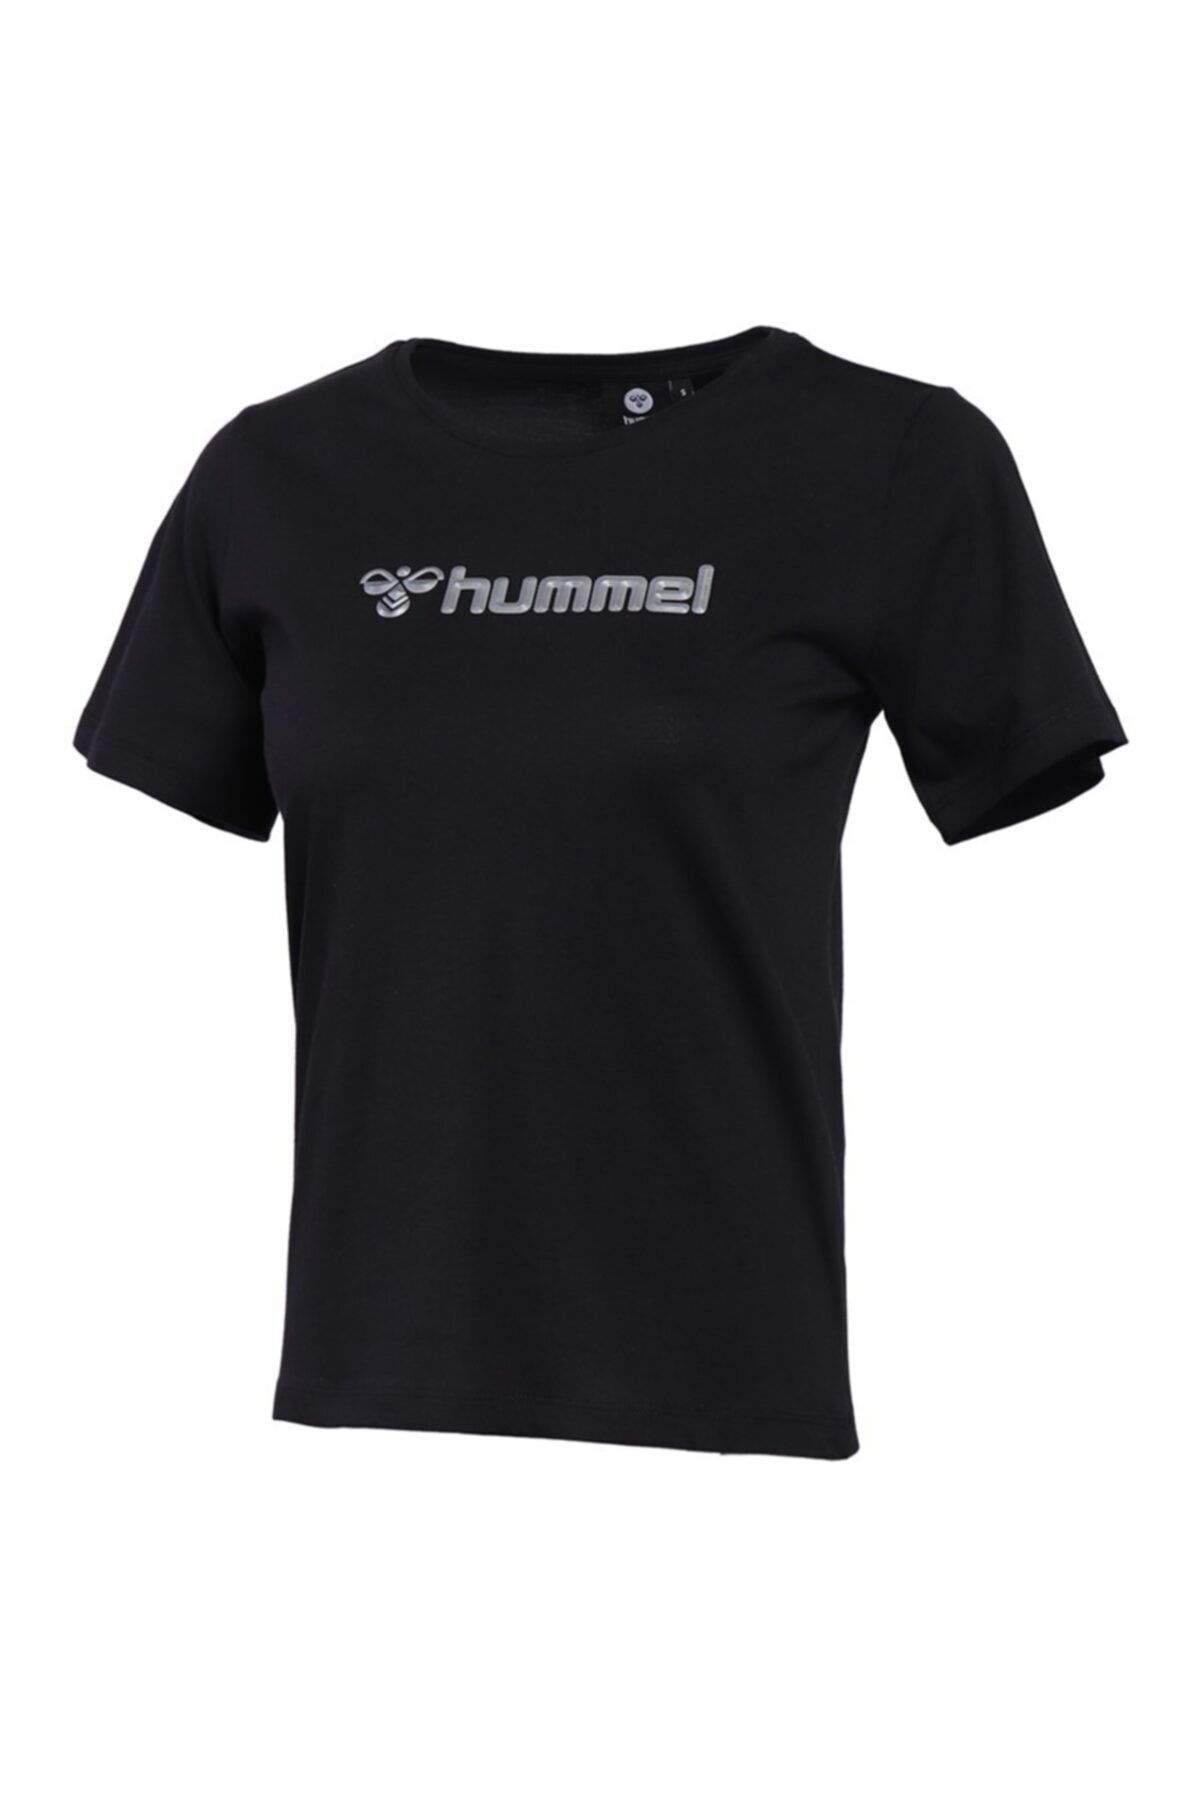 hummel Kadın T-shirt Hmlatri